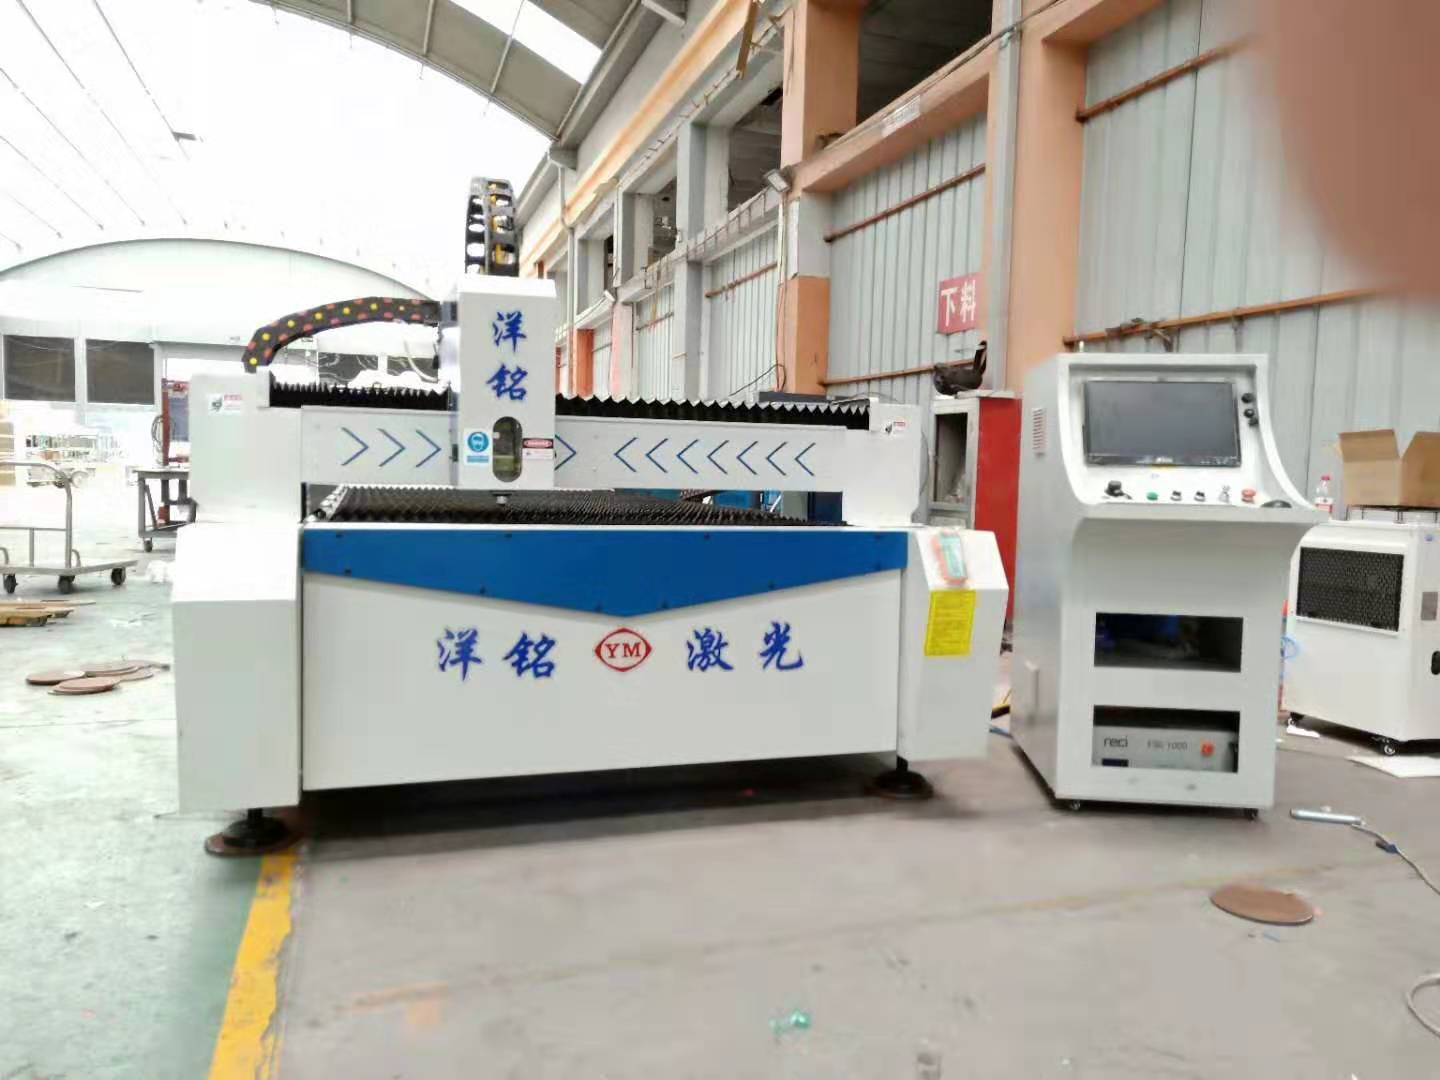 Warmly celebrate the website of Jiangsu Yangming Laser Technology Co., Ltd.!